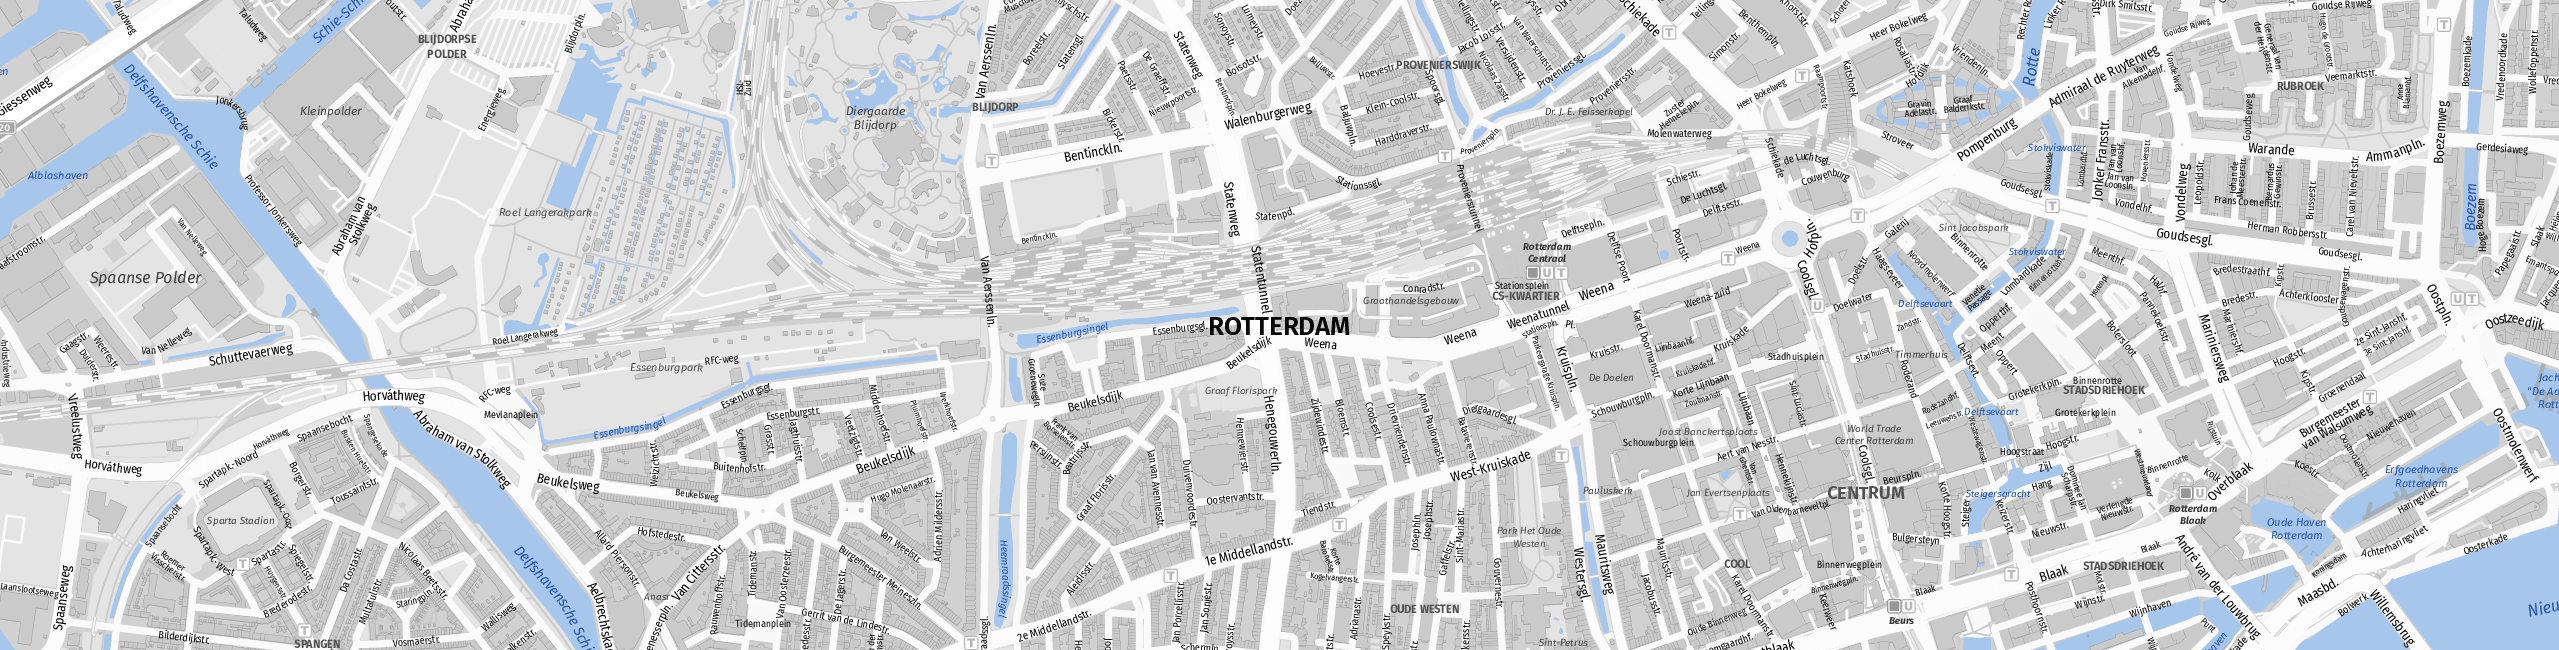 Stadtplan Rotterdam zum Downloaden.